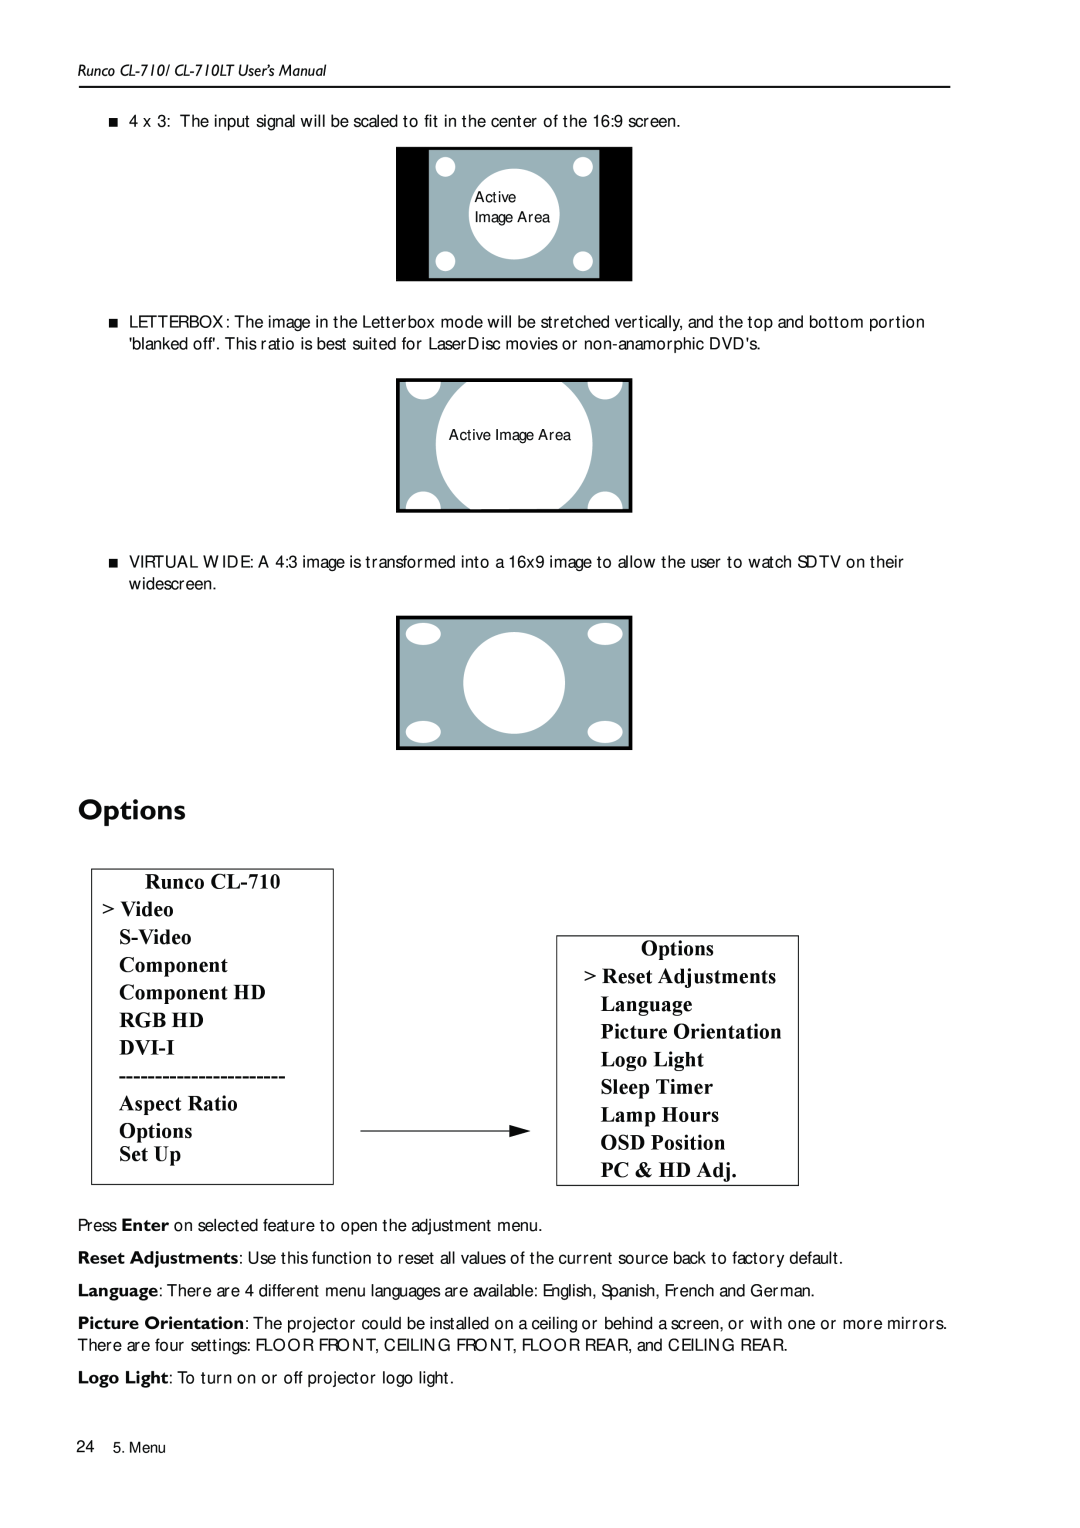 Runco CL-710LT manual Sleep Timer Lamp Hours OSD Position PC & HD Adj, Runco CL-710, Aspect Ratio Options Set Up 